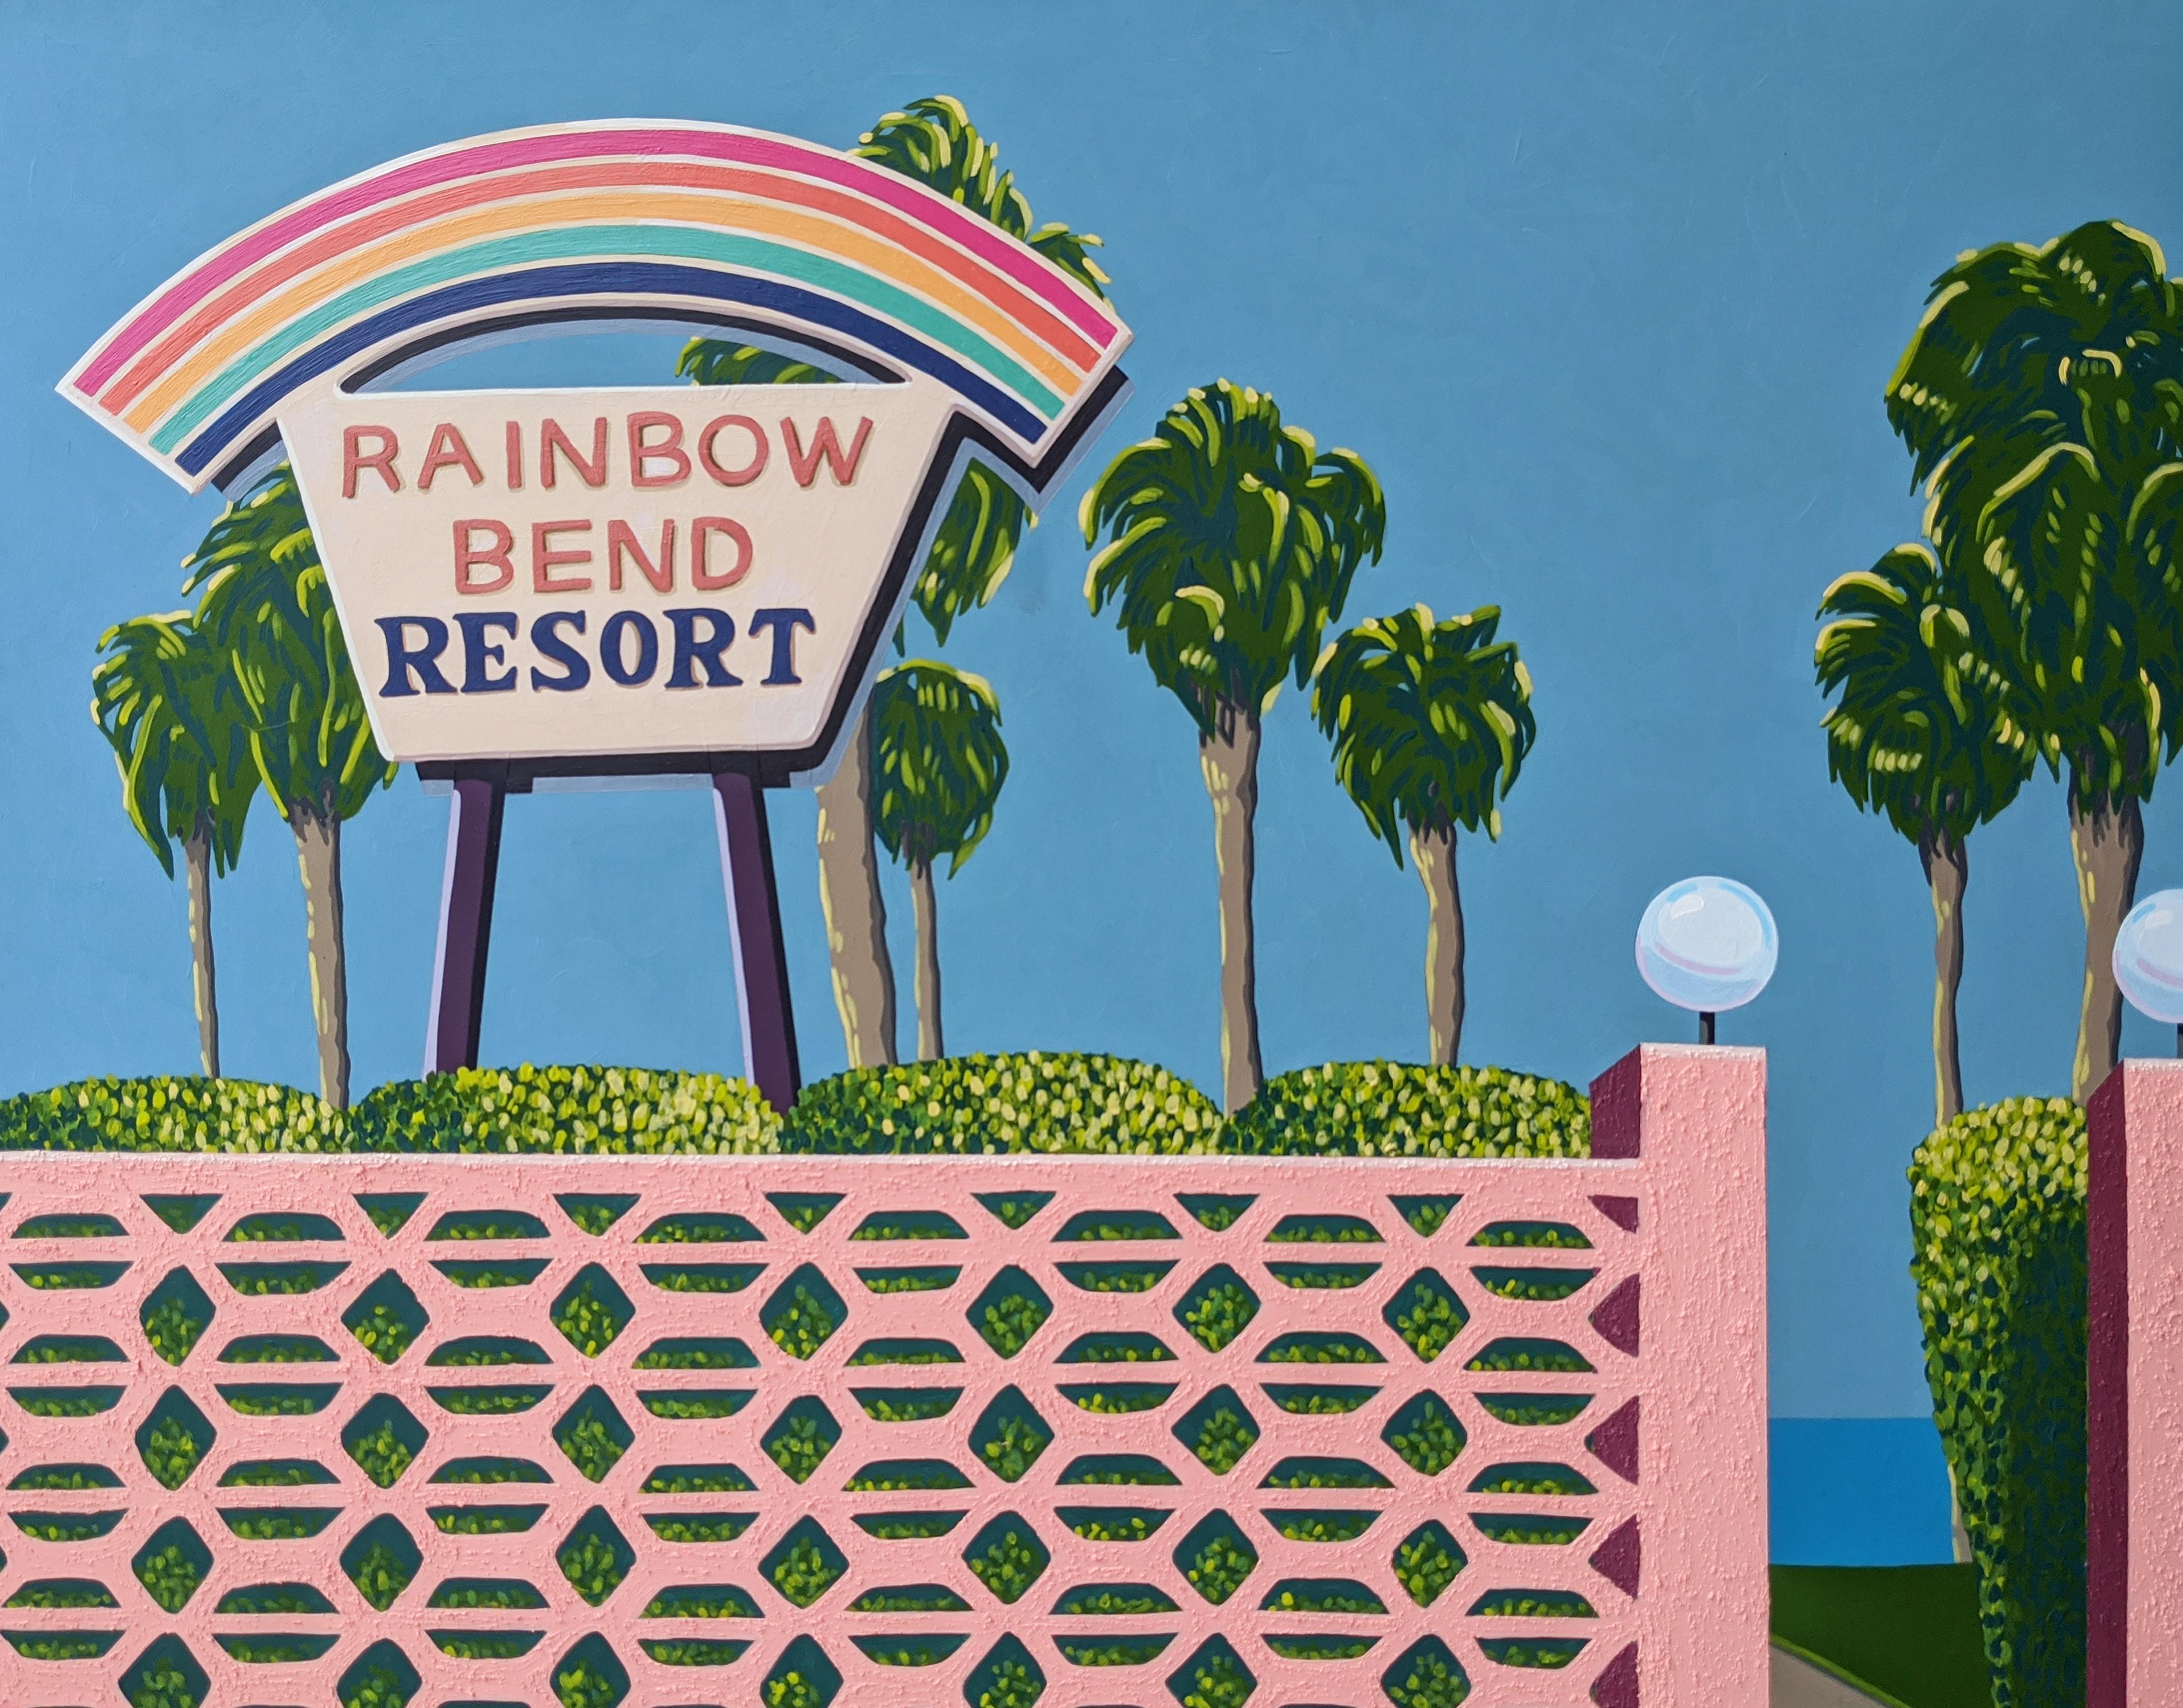 Rainbow bend resort - landscape painting